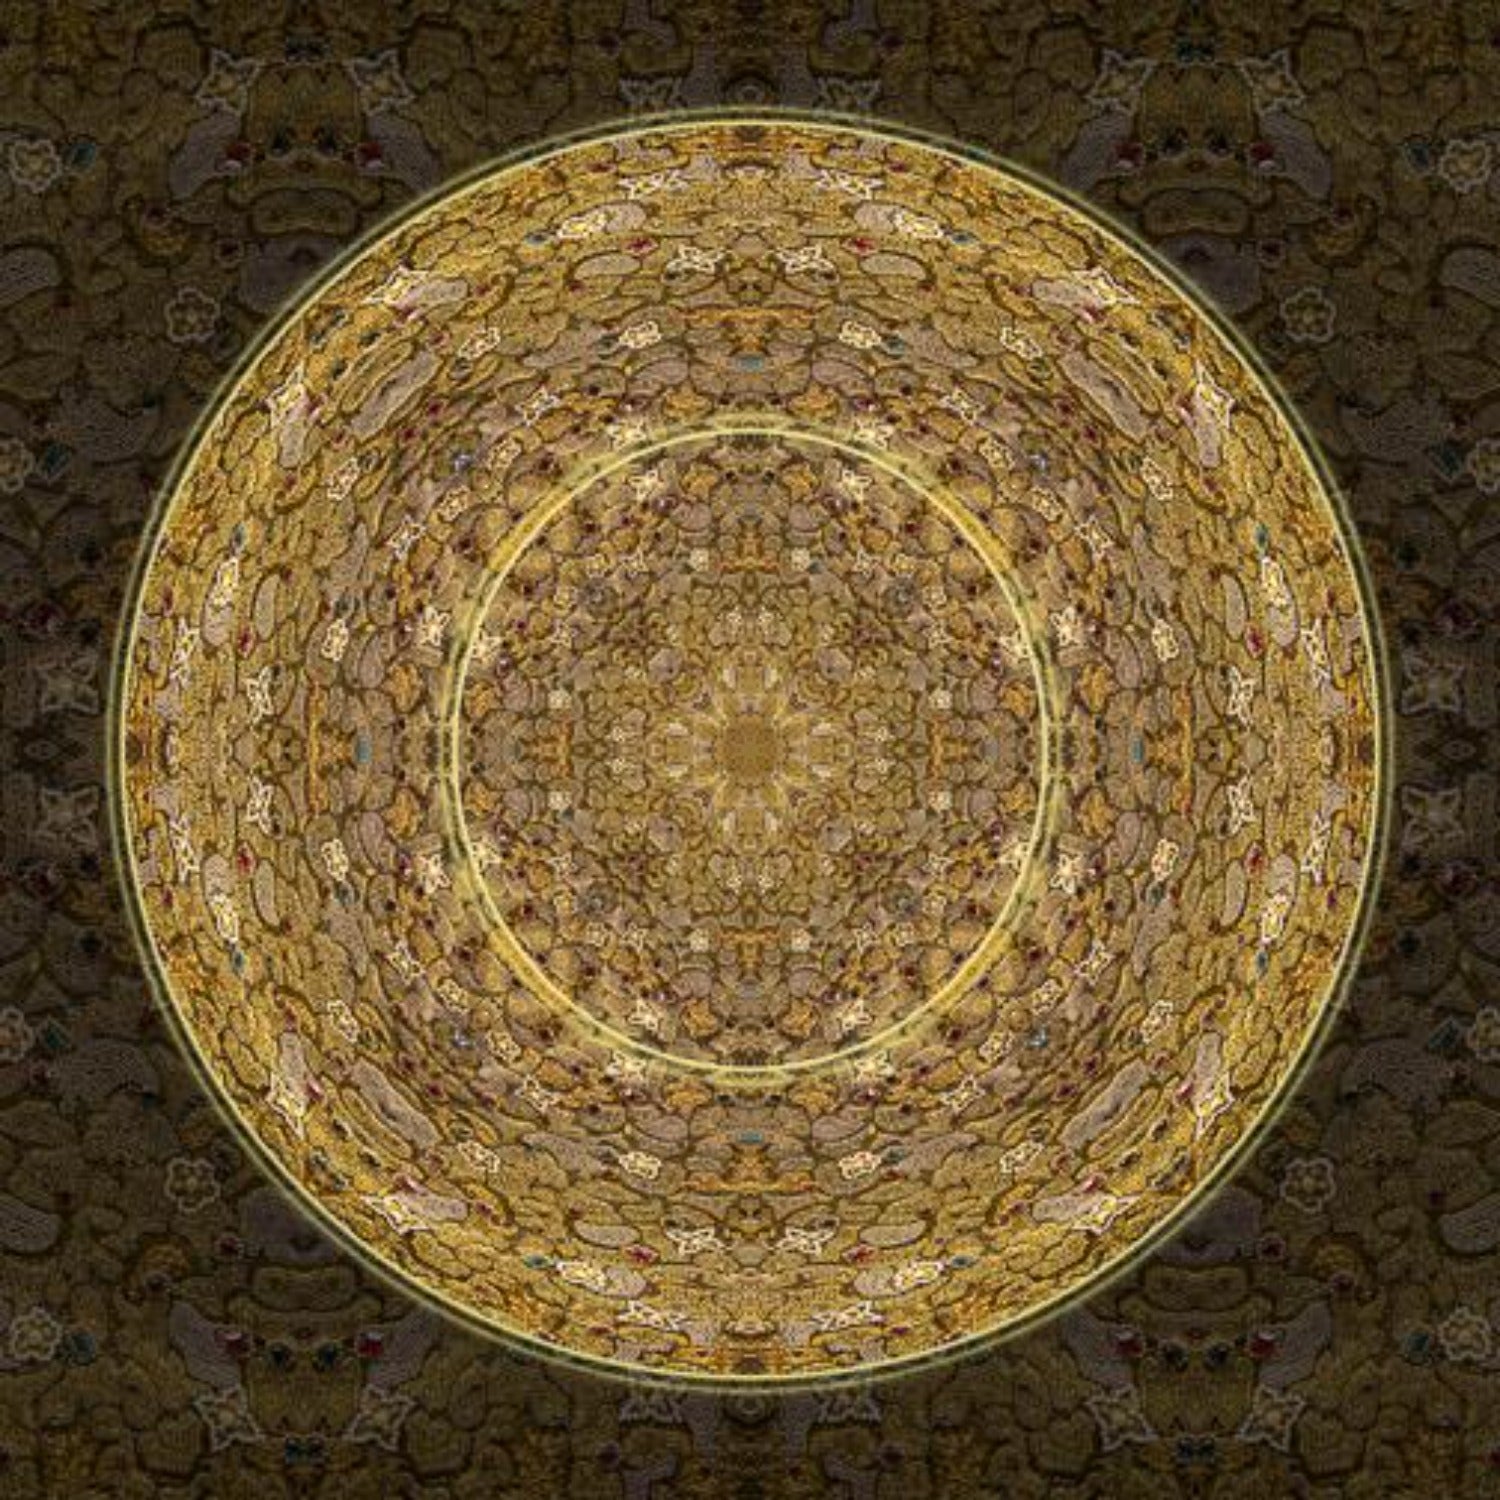 monochrome gold rich textured circle art